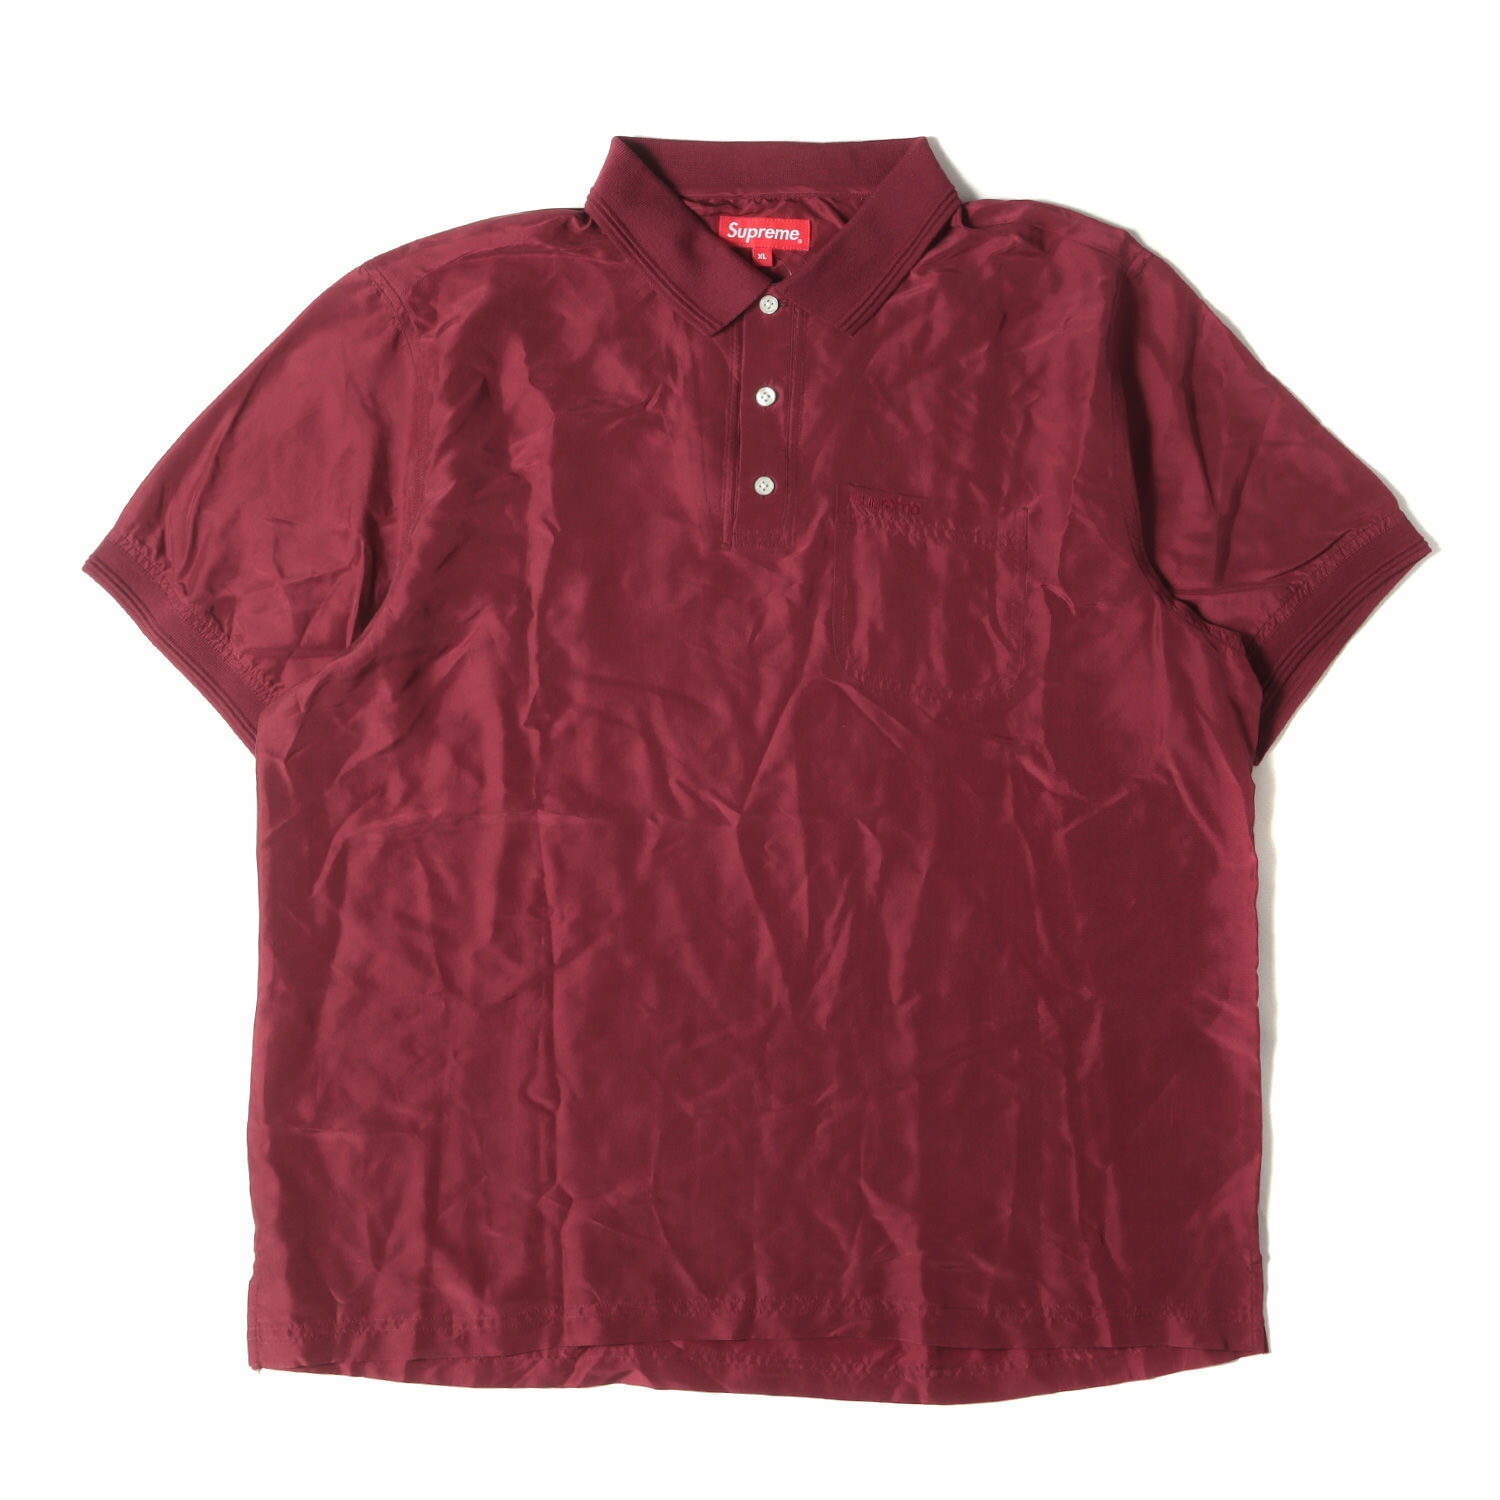 Supreme シュプリーム ポロシャツ サイズ:XL 17SS クラシックロゴ シルク 半袖ポロシャツ / Silk Polo バーガンディー トップス カットソー【メンズ】【K4080】